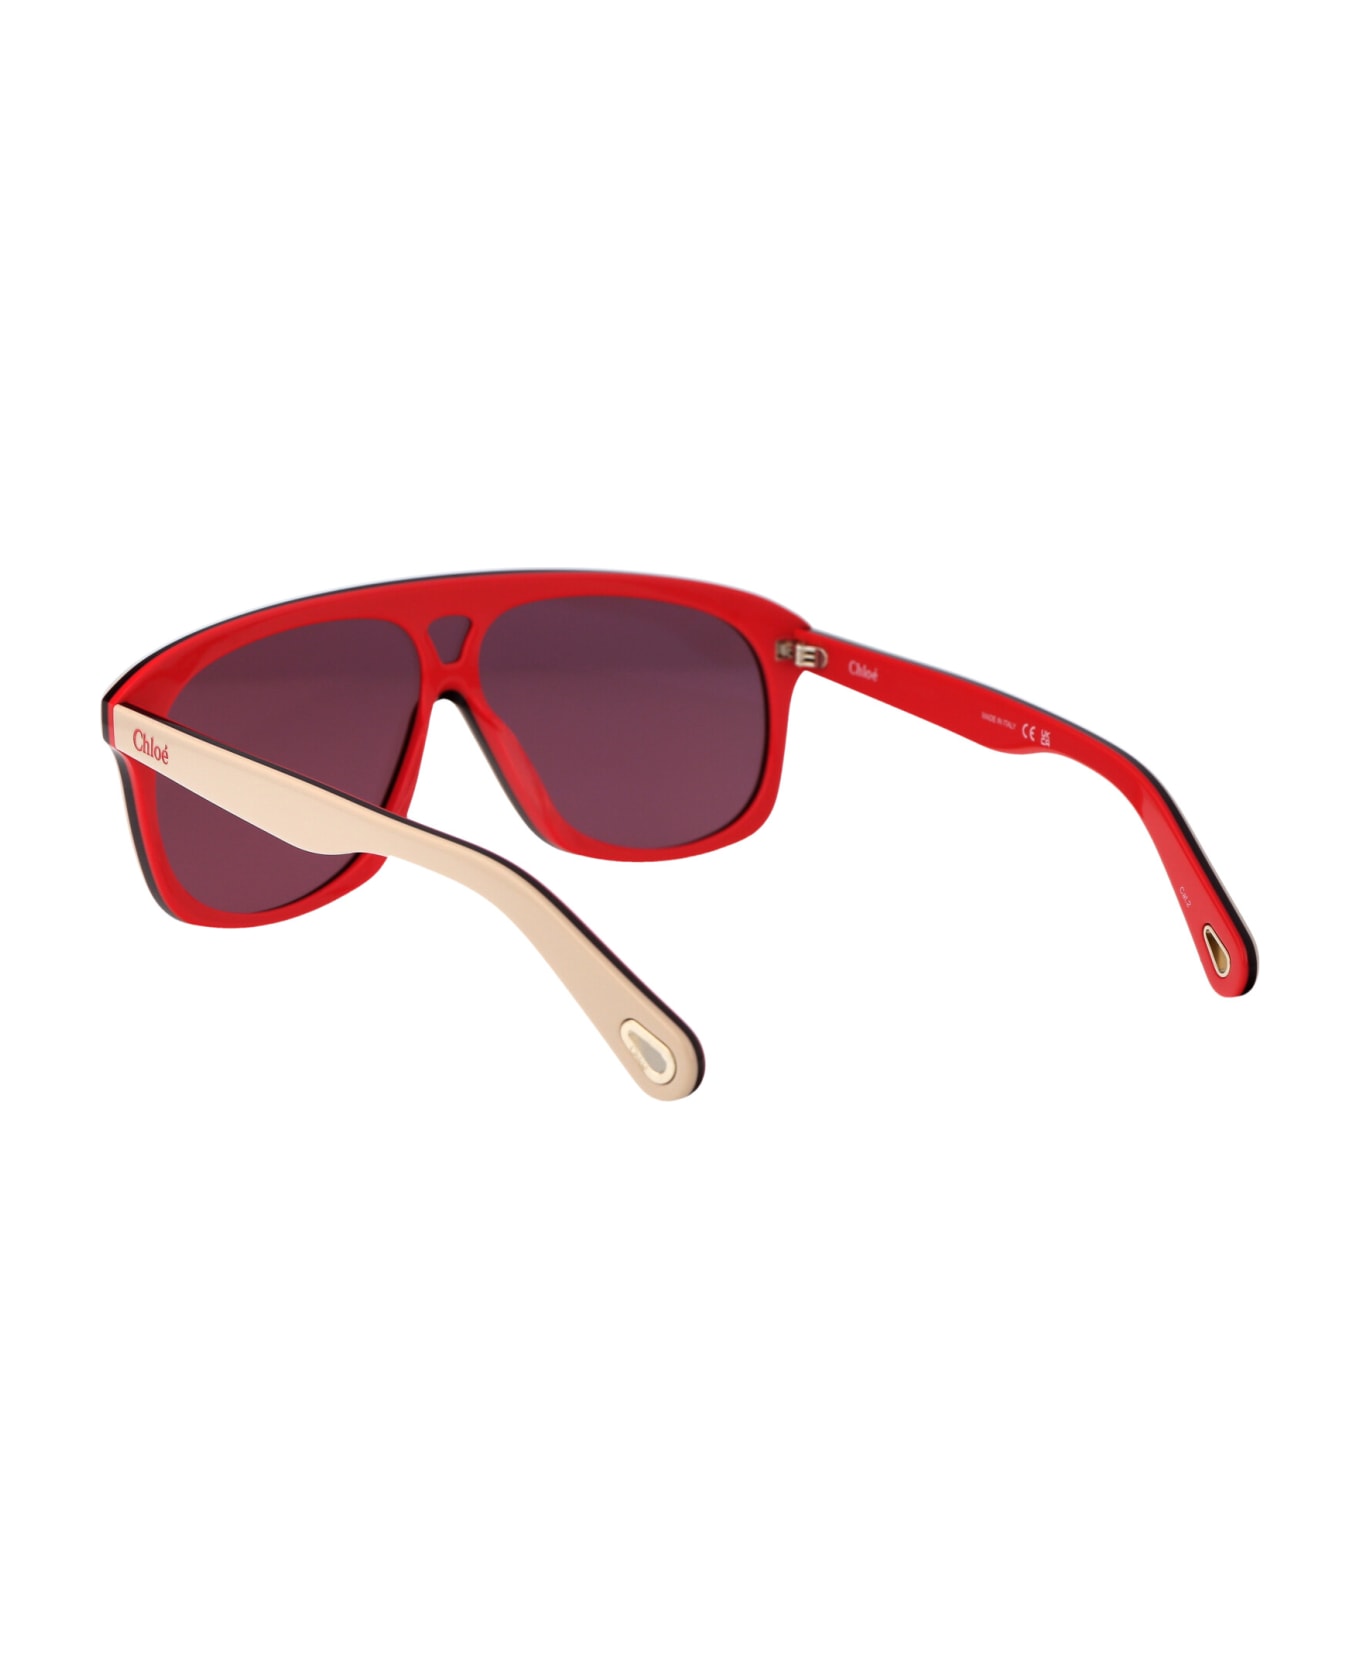 Chloé Eyewear Ch0212s Sunglasses - 005 IVORY IVORY PINK サングラス